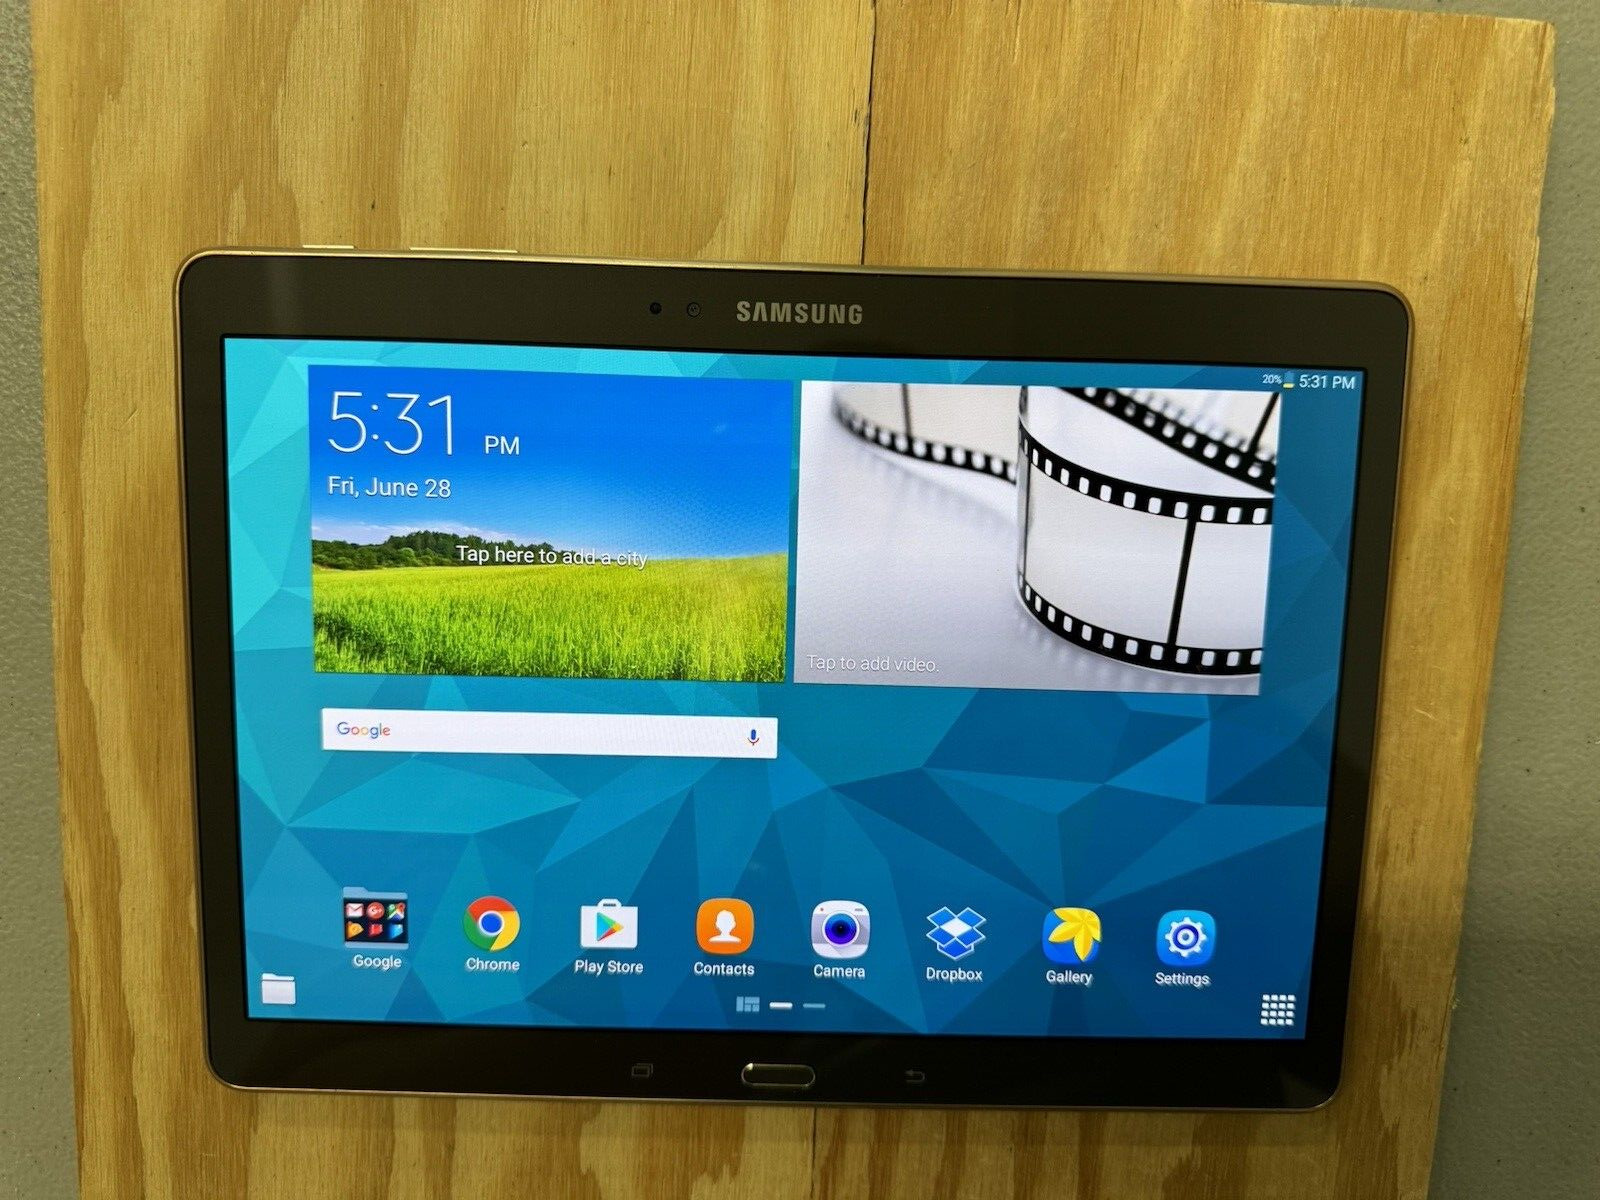 Samsung Galaxy Tab S SM-T800 32GB Wi-Fi Android 10.5